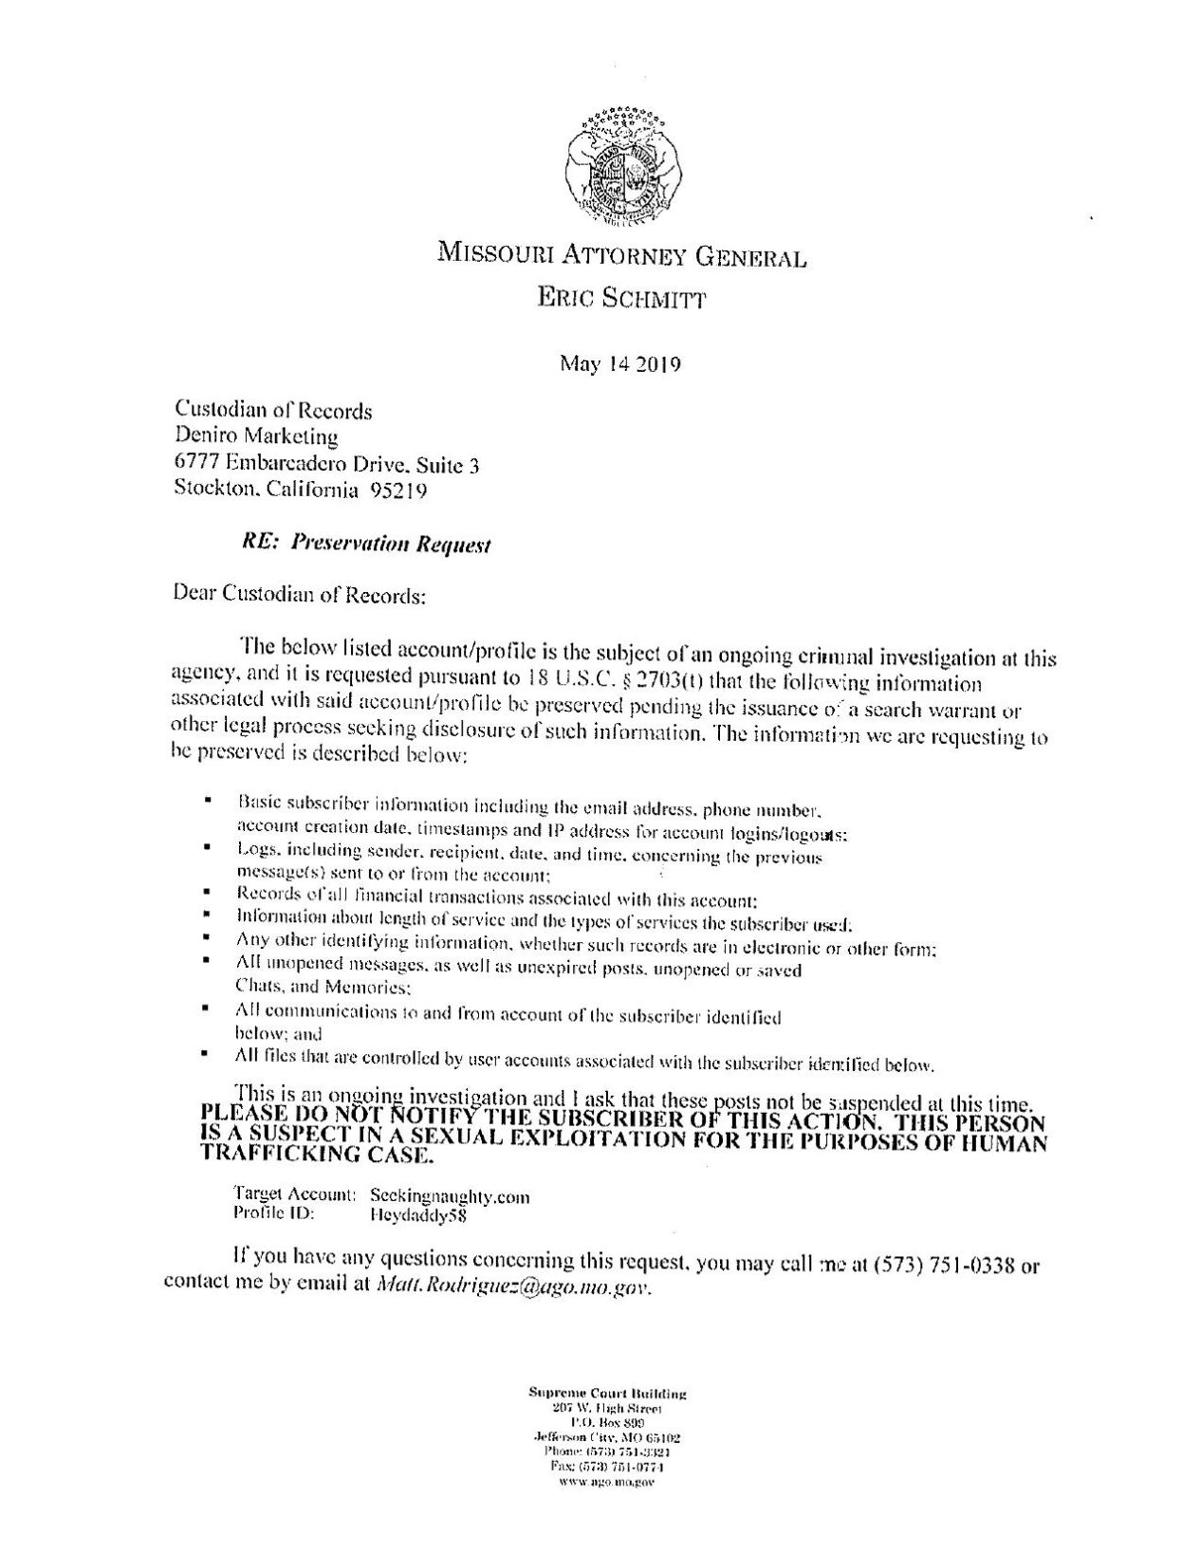 Murawski Investigation Doc 3-1 - Preservation Letter To SeekingNaughty.com